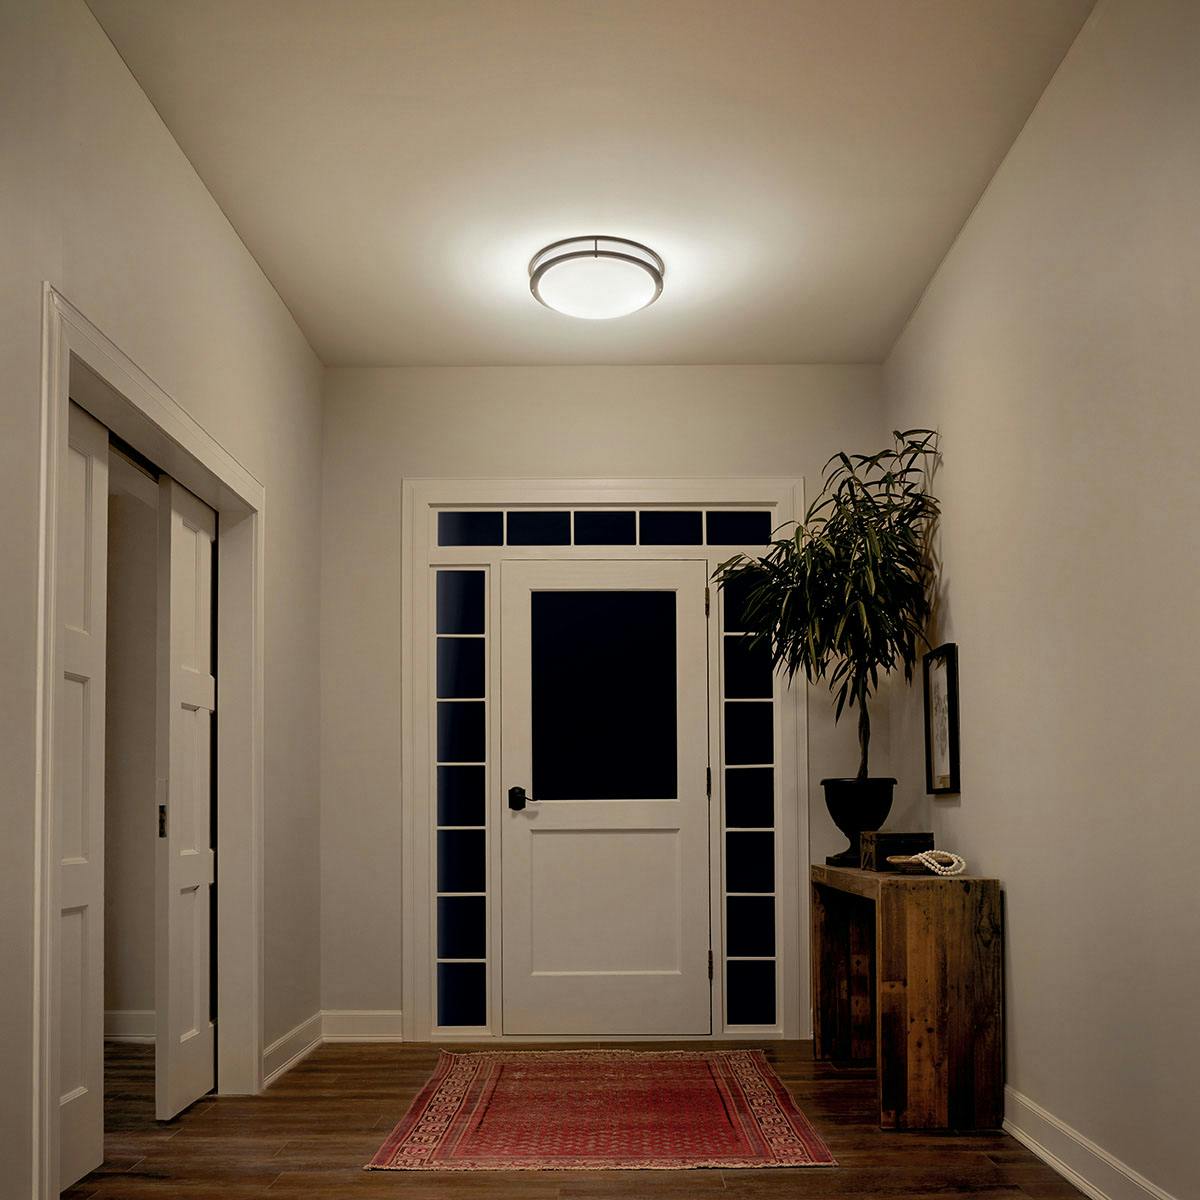 Night time Hallway image featuring Avon flush mount light 10789OZLED